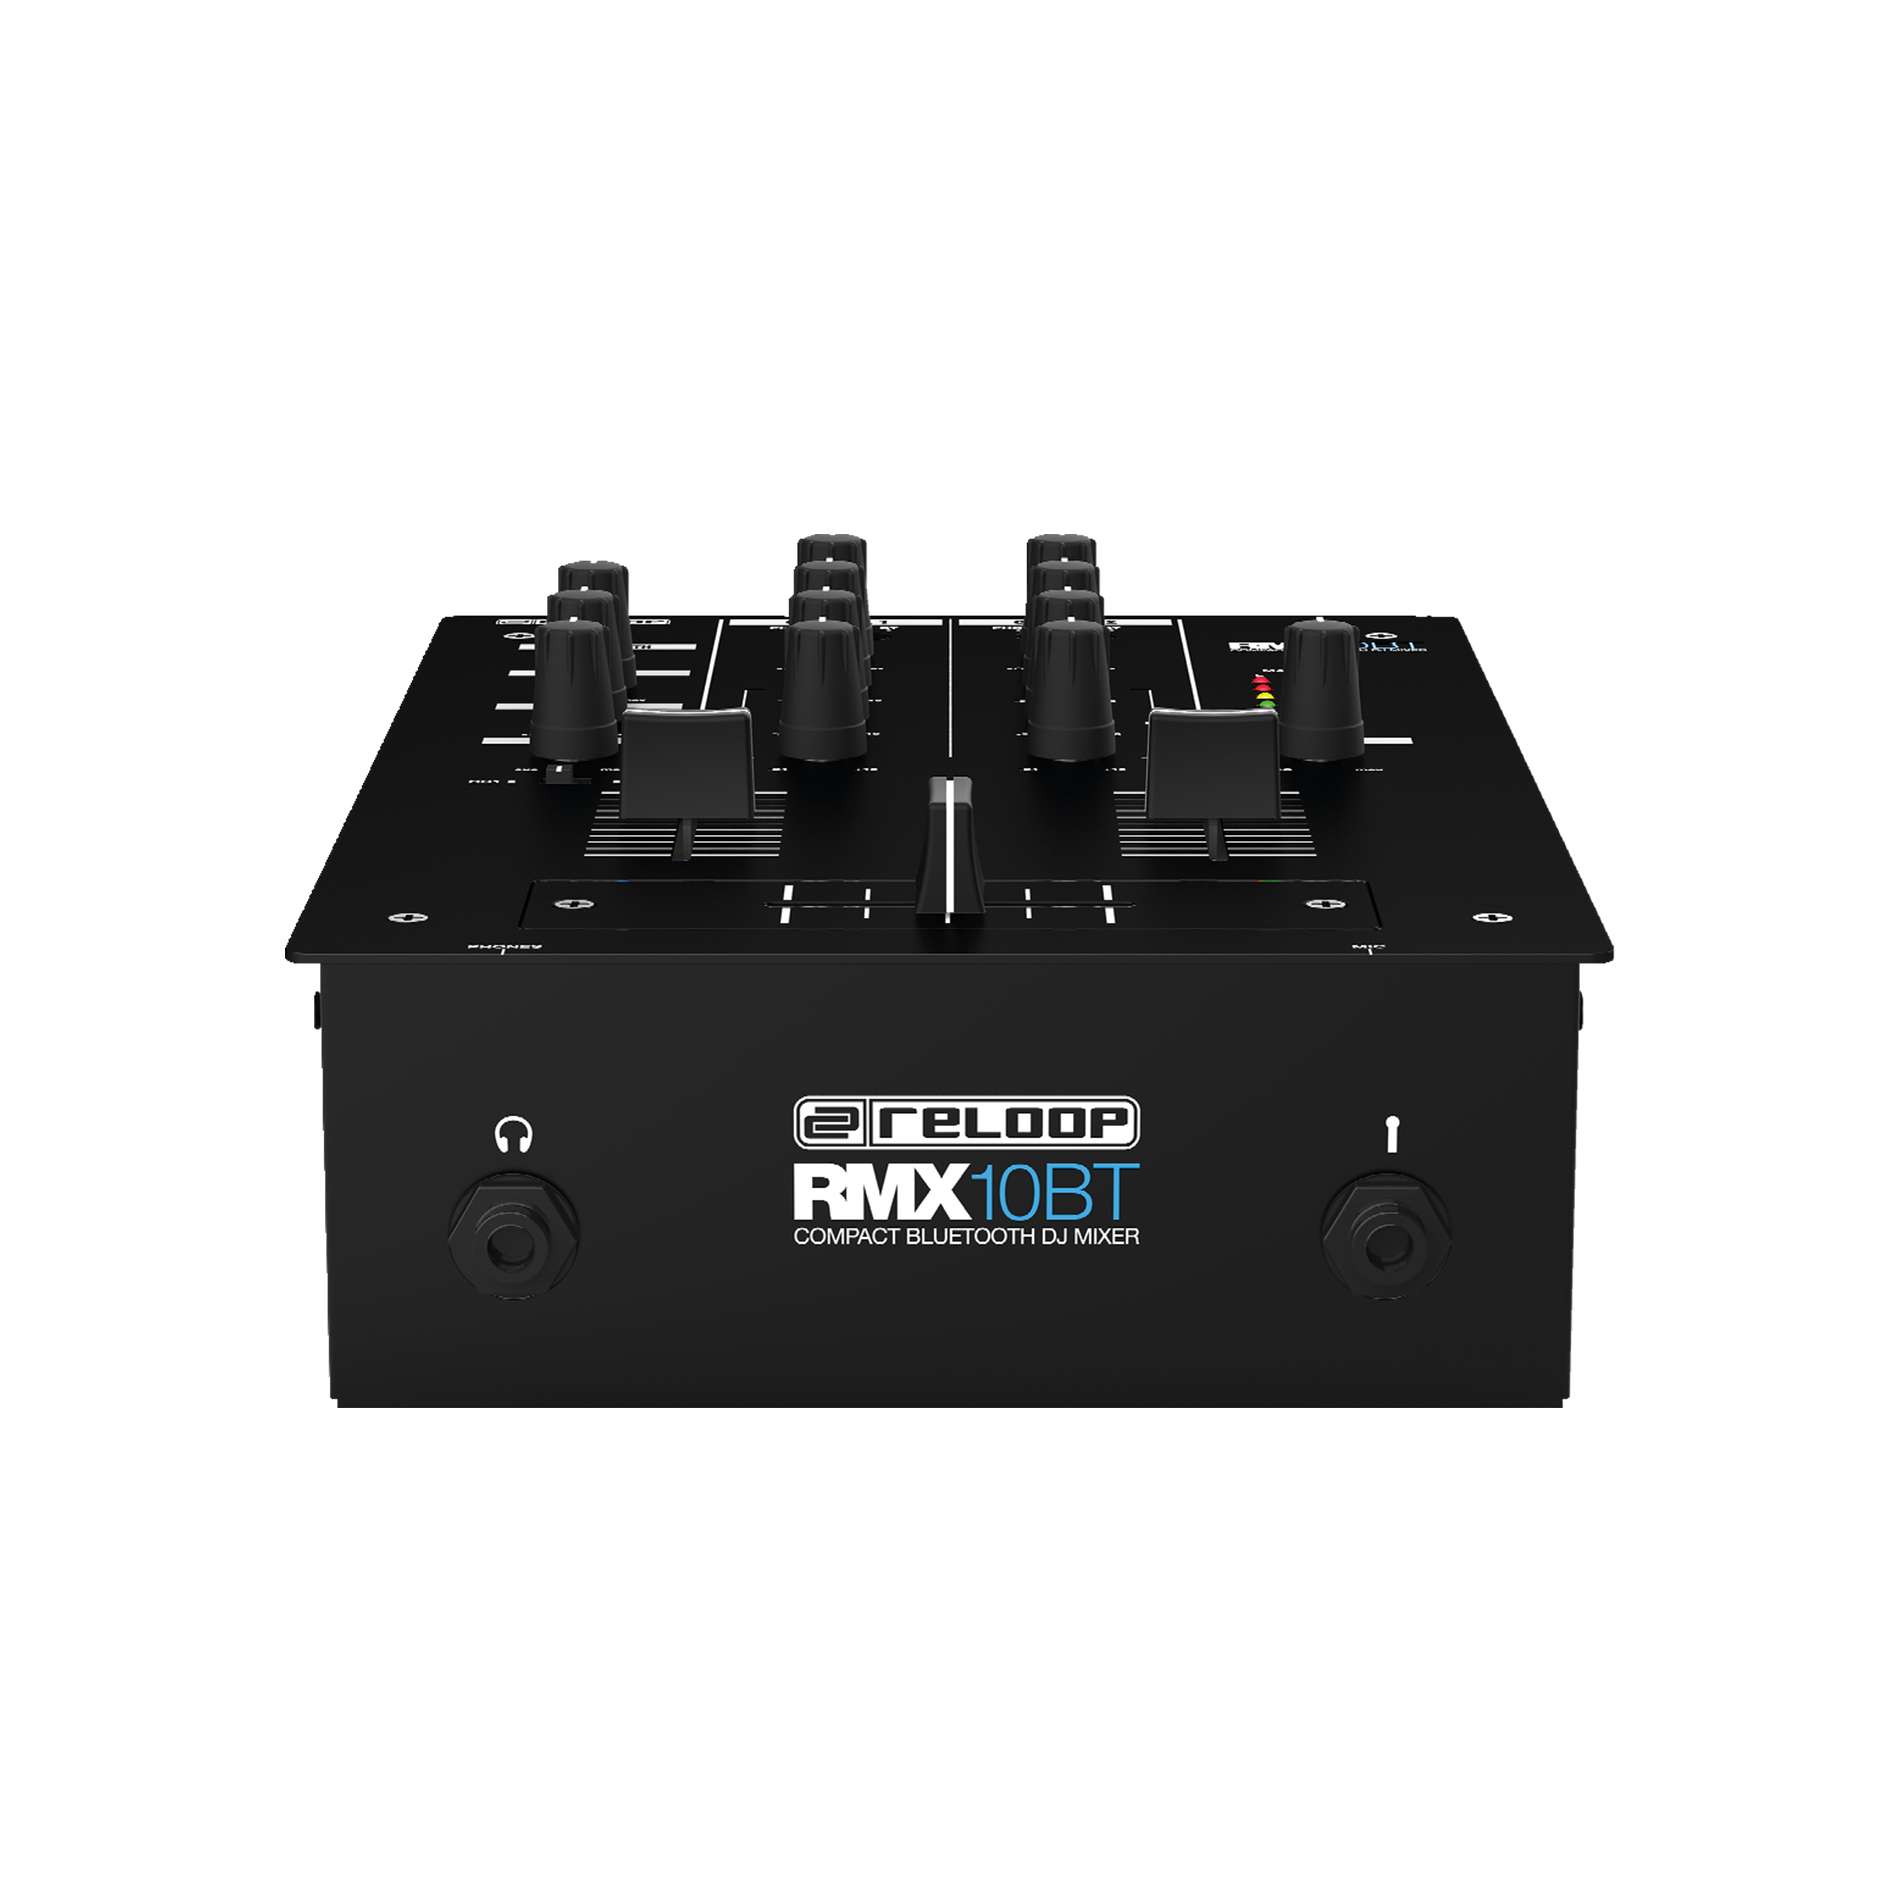 Reloop Rmx-10 Bt - DJ mixer - Variation 4